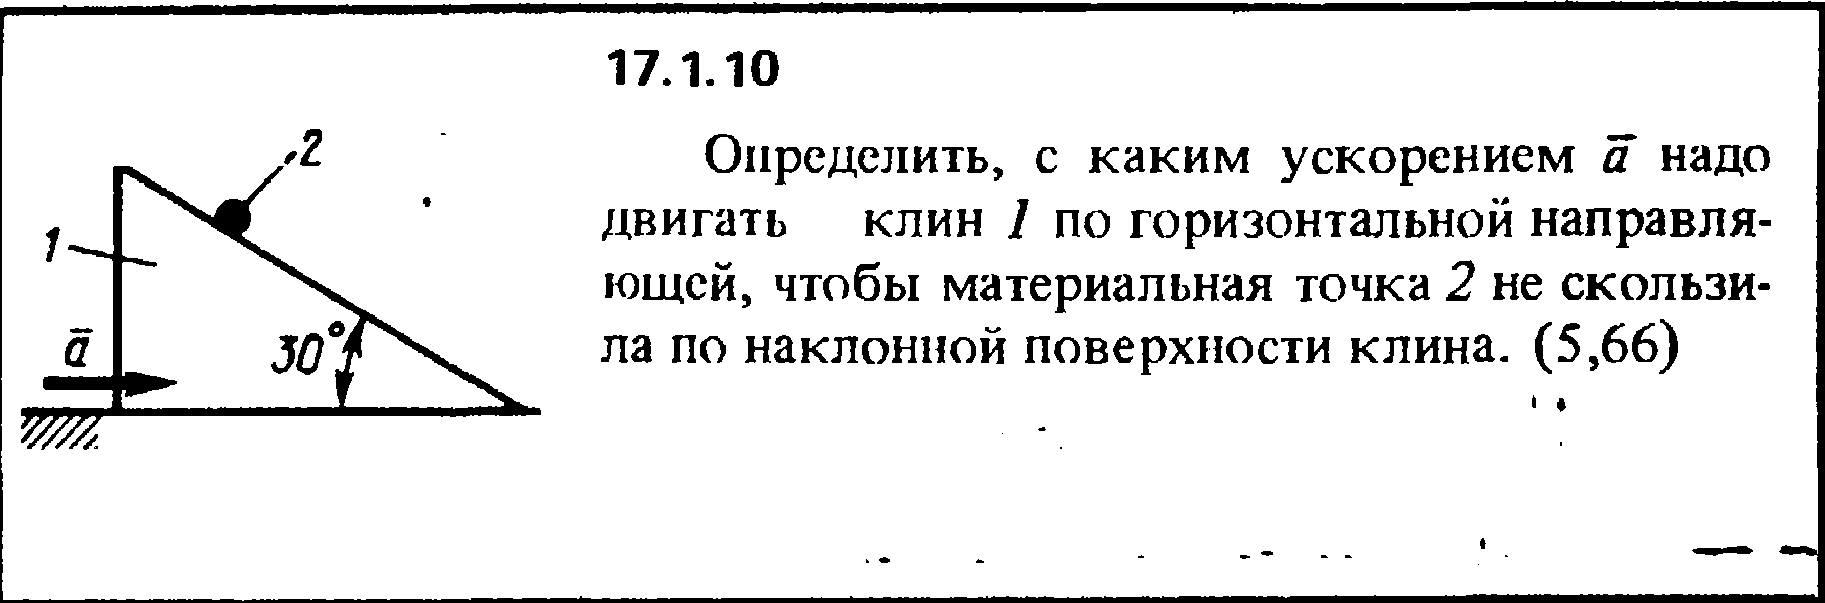 Решение задачи 17.1.10 из сборника Кепе О.Е. 1989 года